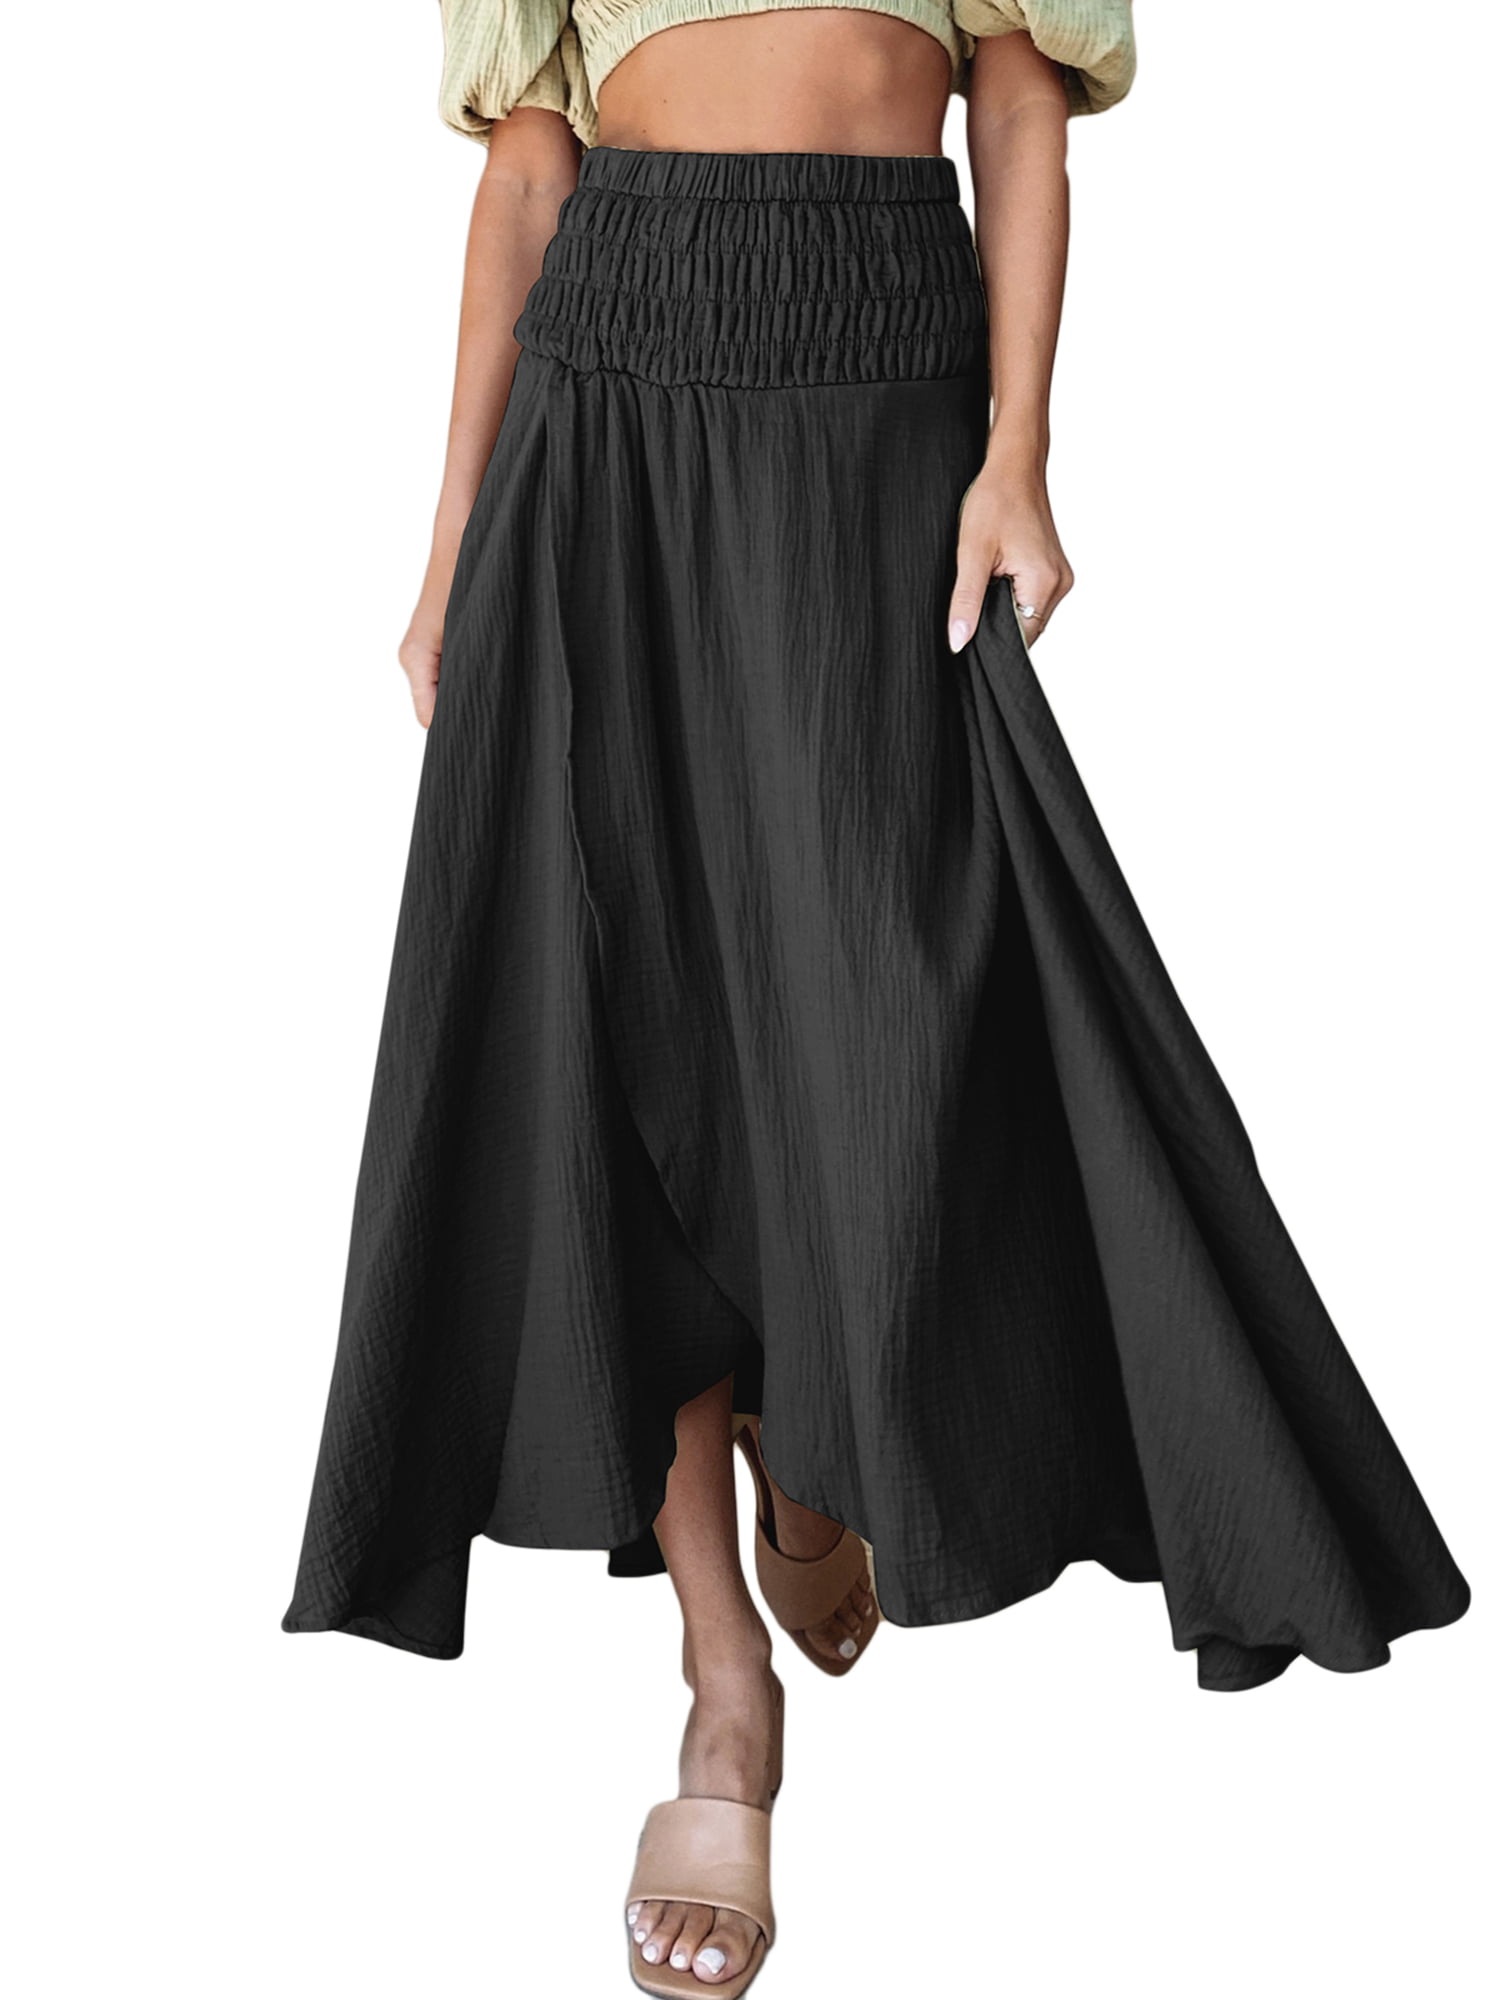 Kayotuas Womens Boho Summer Dress Maxi Skirt High Low Ruffle Slit ...